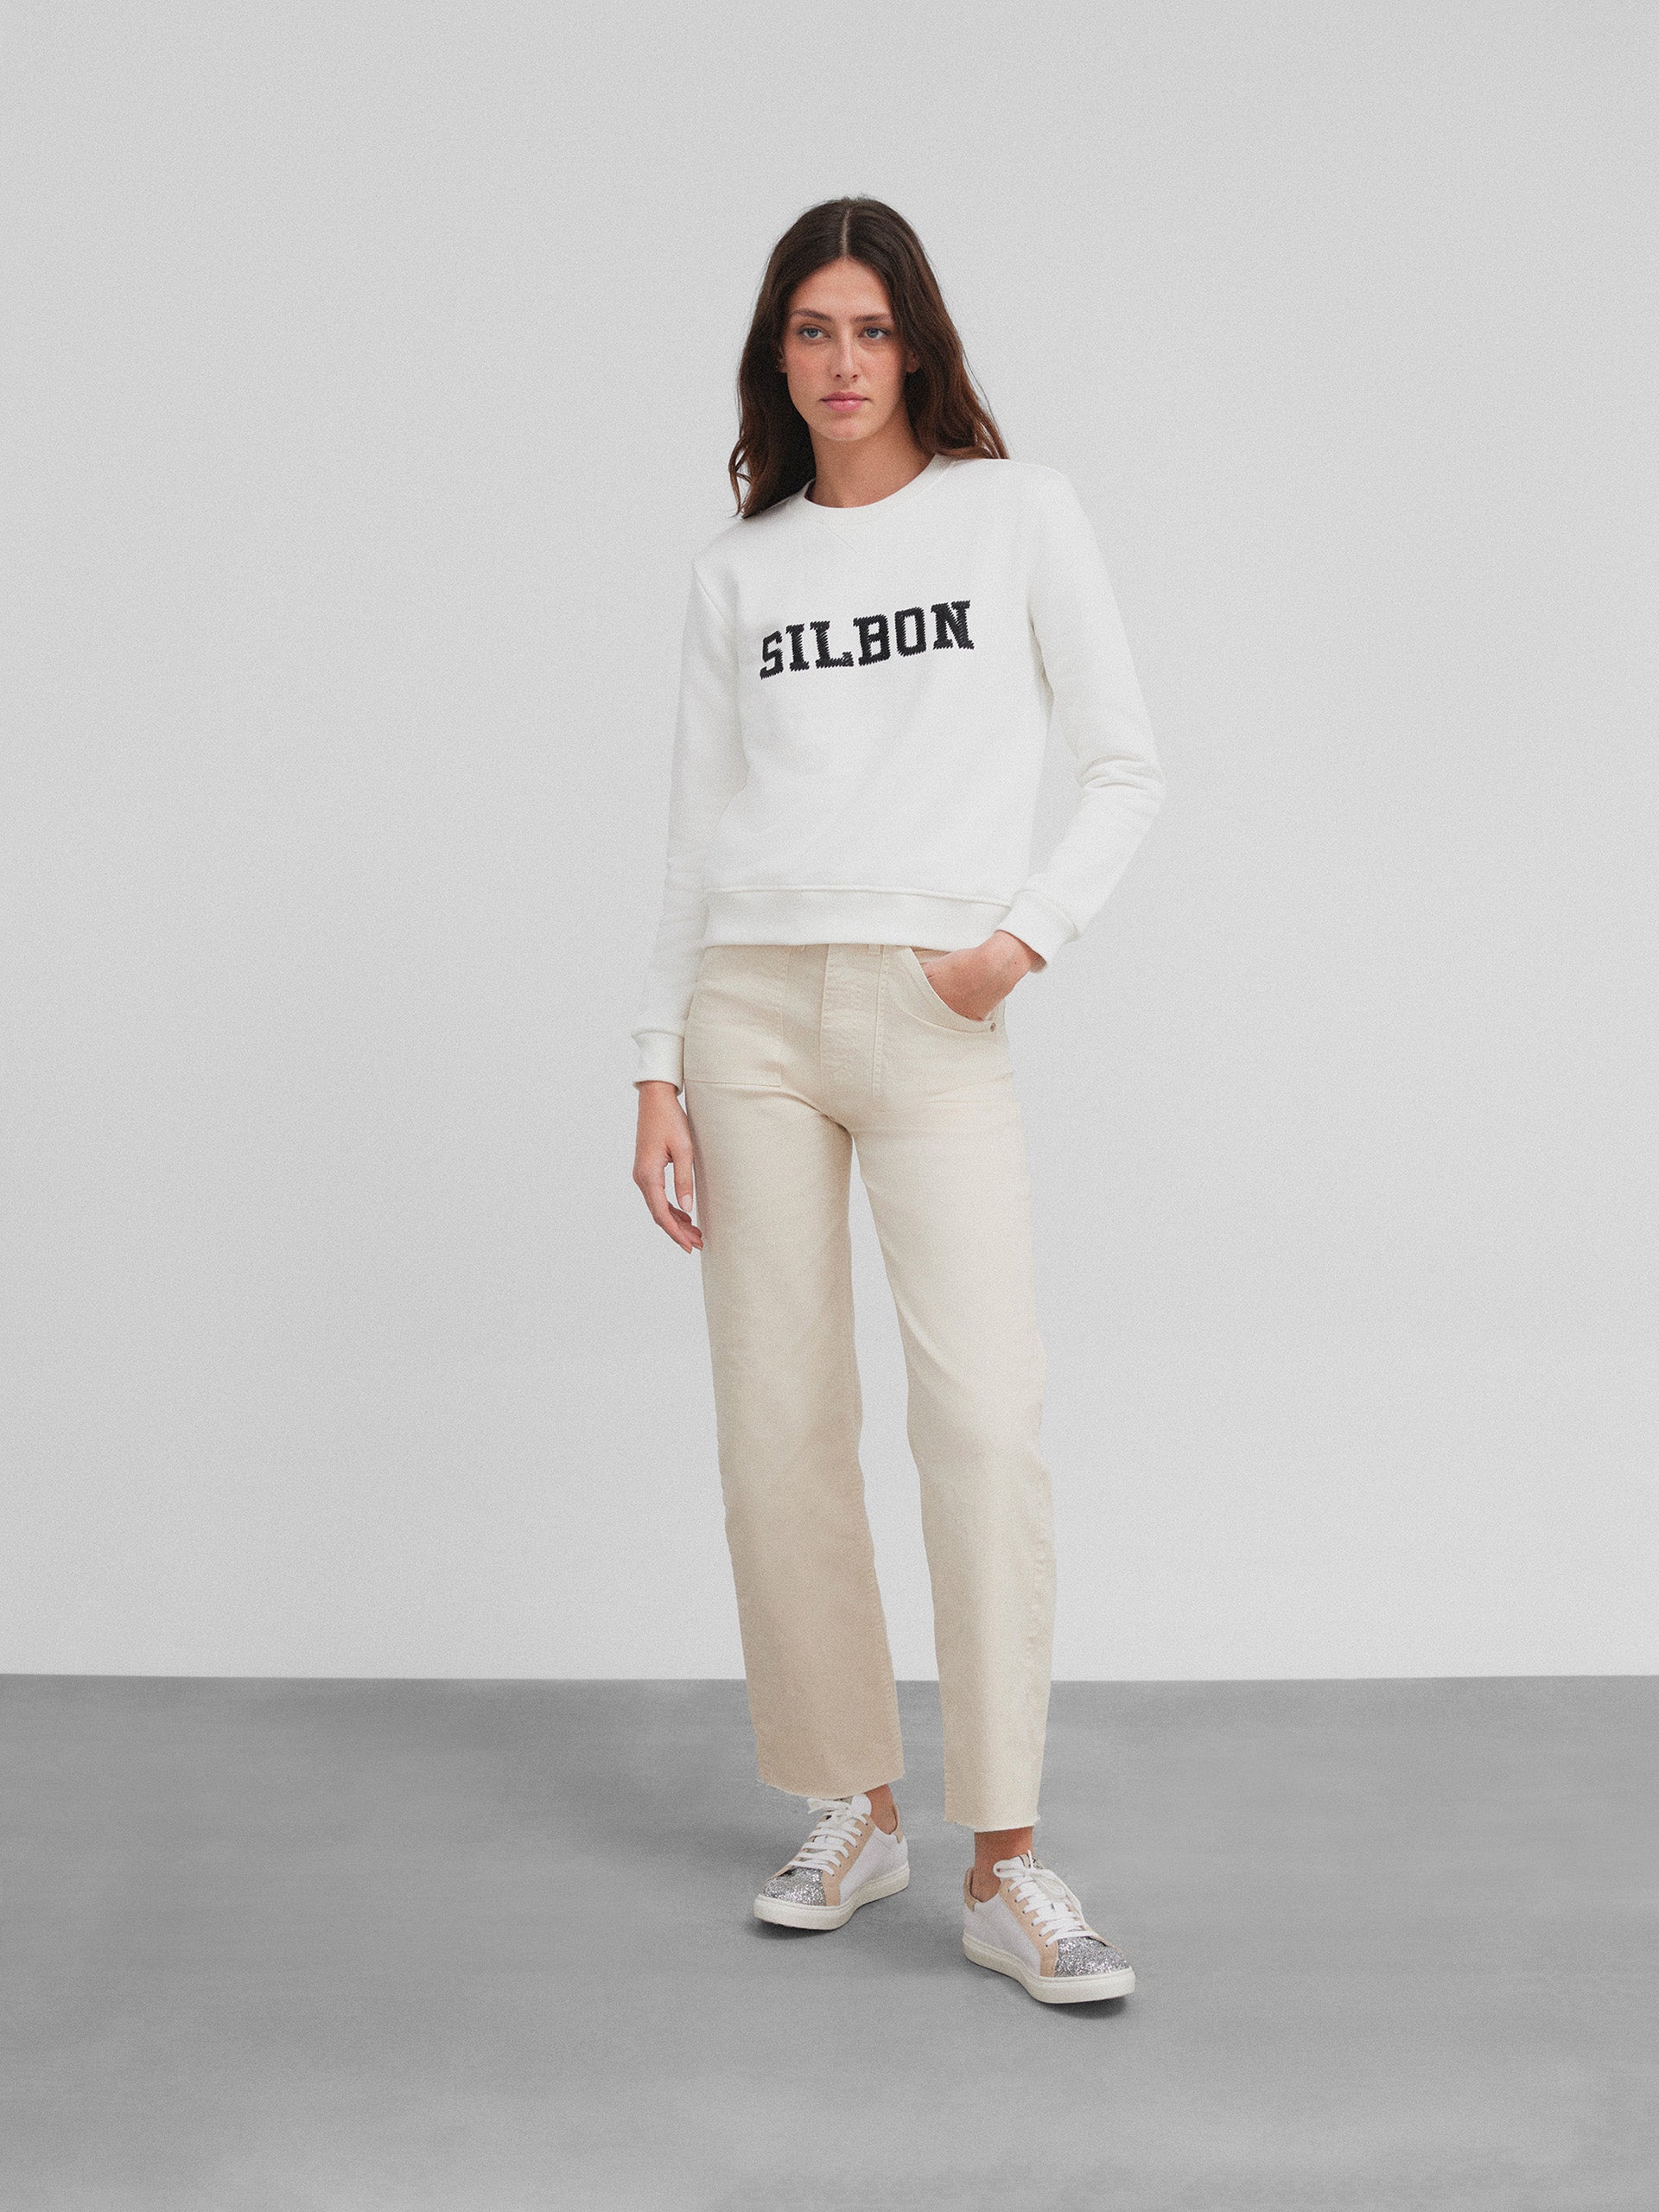 Women's sweatshirt with white Silbon letters